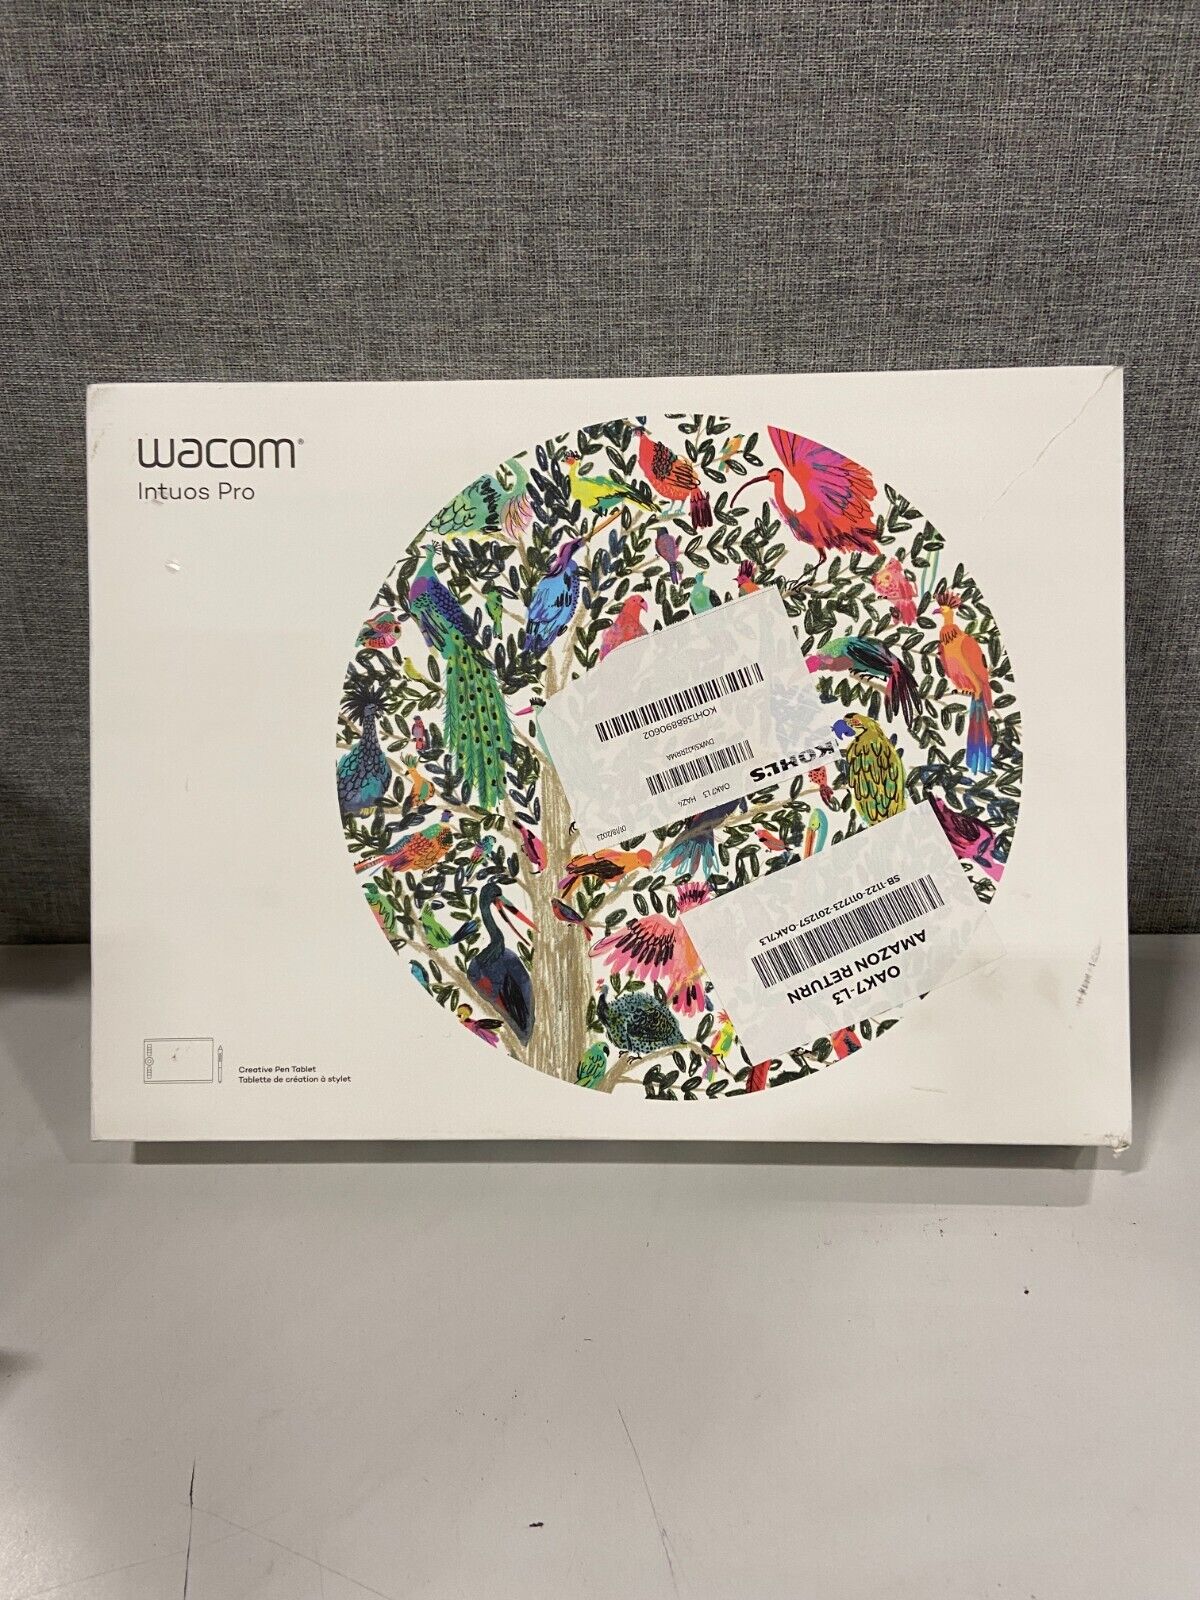 Wacom Intuos Pro Medium Digital Graphic Drawing Tablet - Used